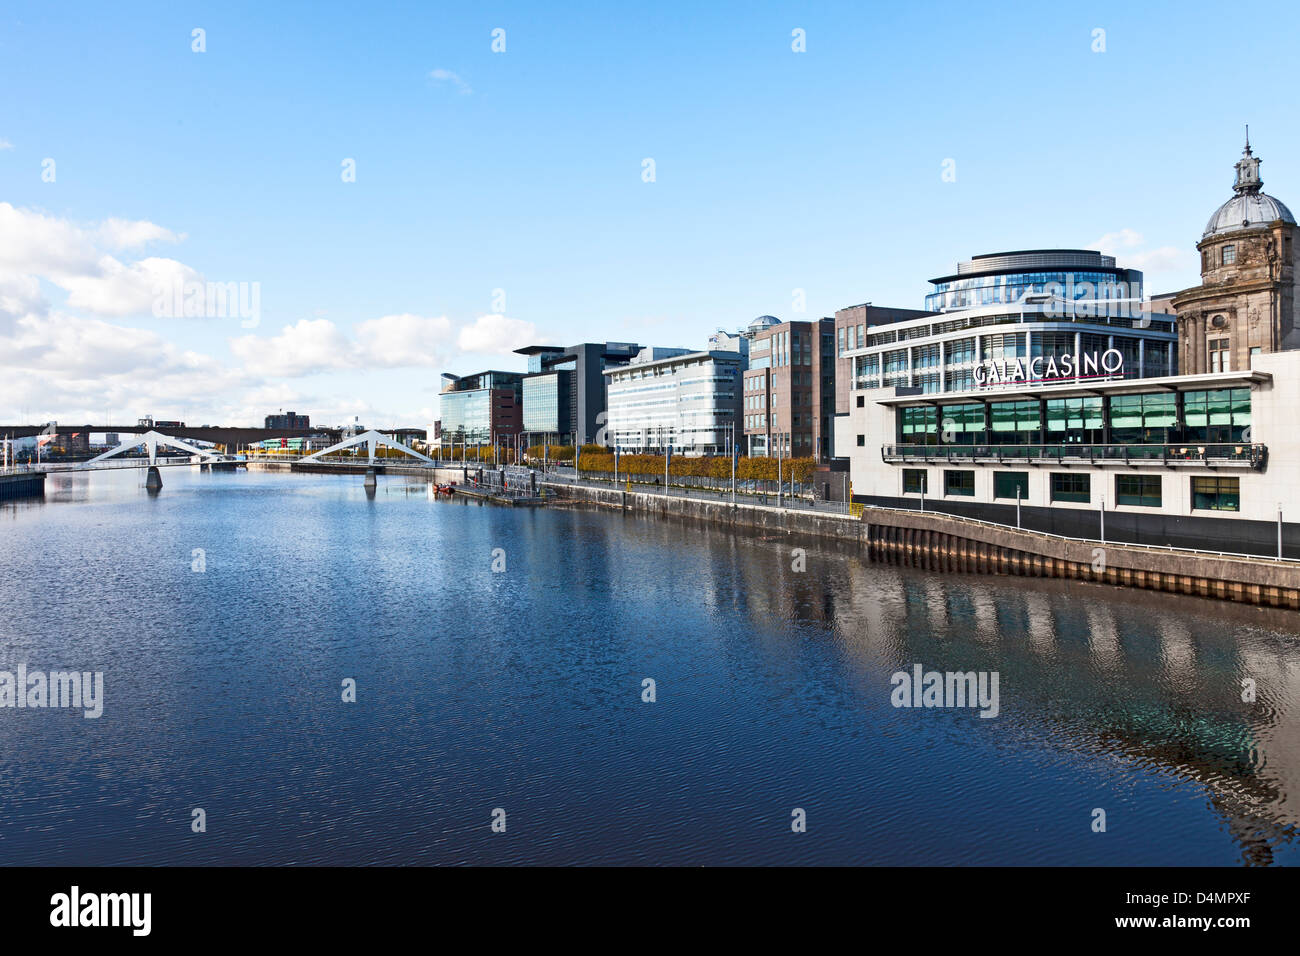 IFSD district of Glasgow: Gala Casino - Broomielaw / Atlantic Quay - Tradeston / Squiggly Bridge Stock Photo